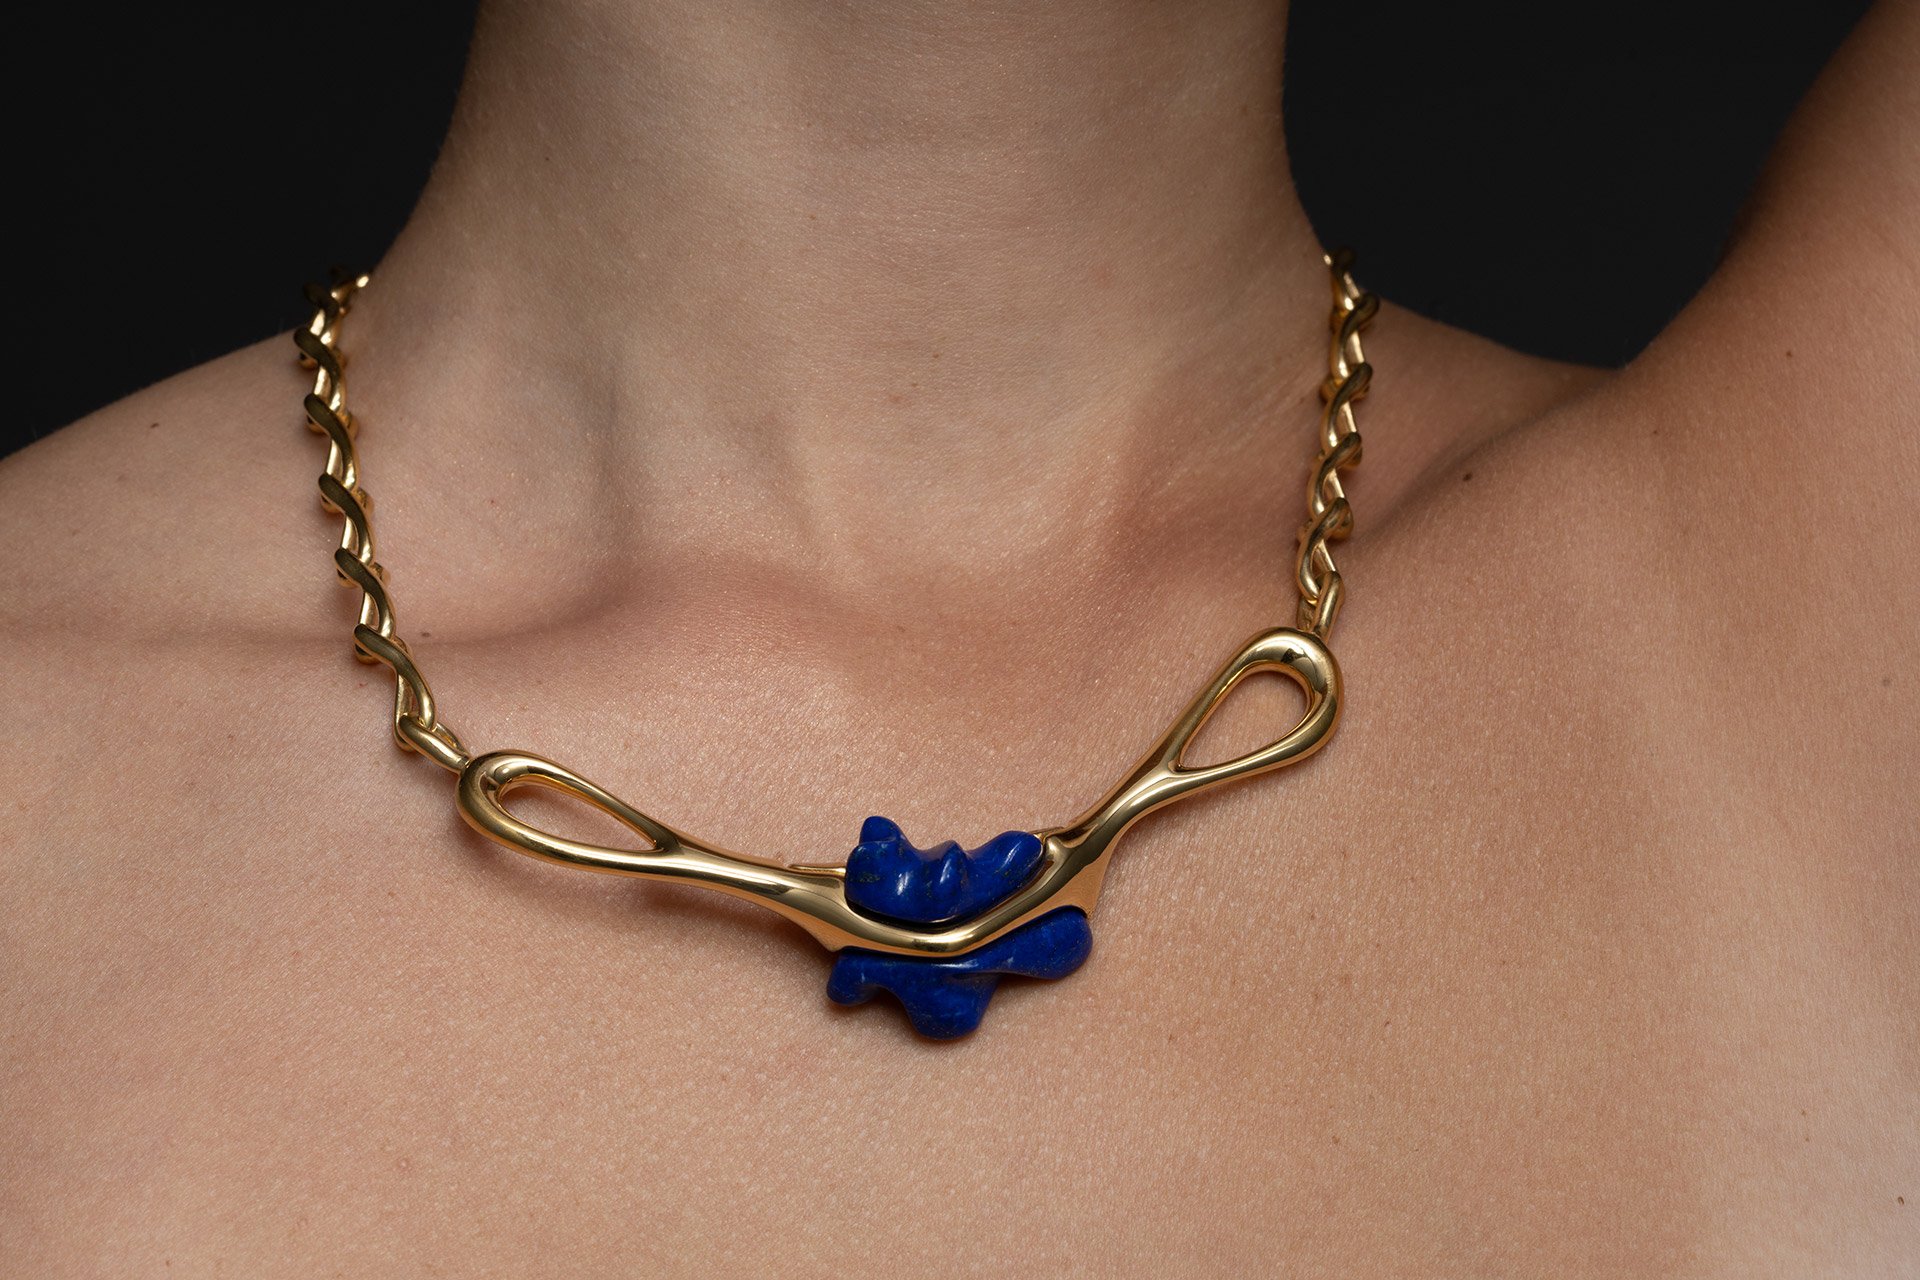 DULCE-egypt-necklaces-collection-julio-martinez-barnetche-marion-friedmann-gallery-LR-egypt07.jpg